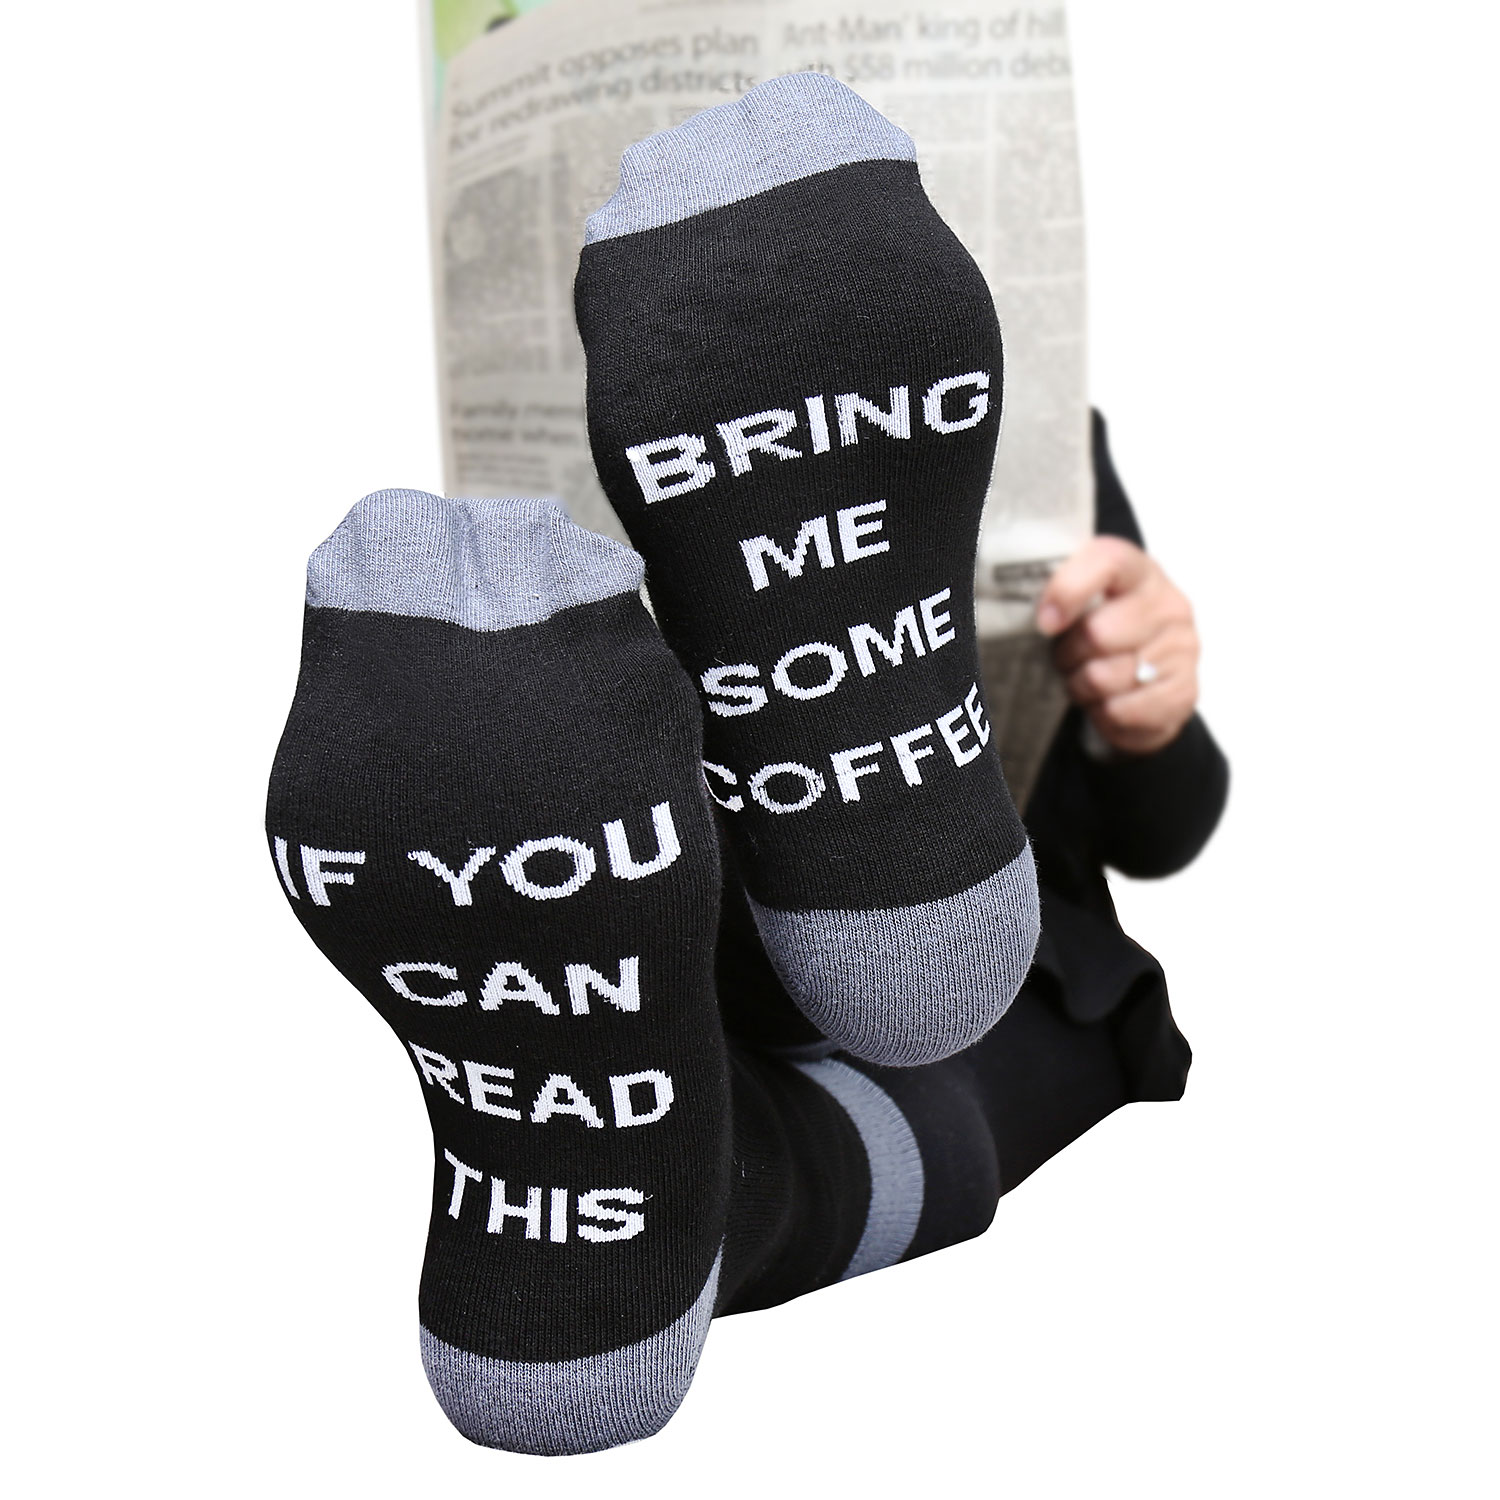 Socks and emmys feet Foot fetish: